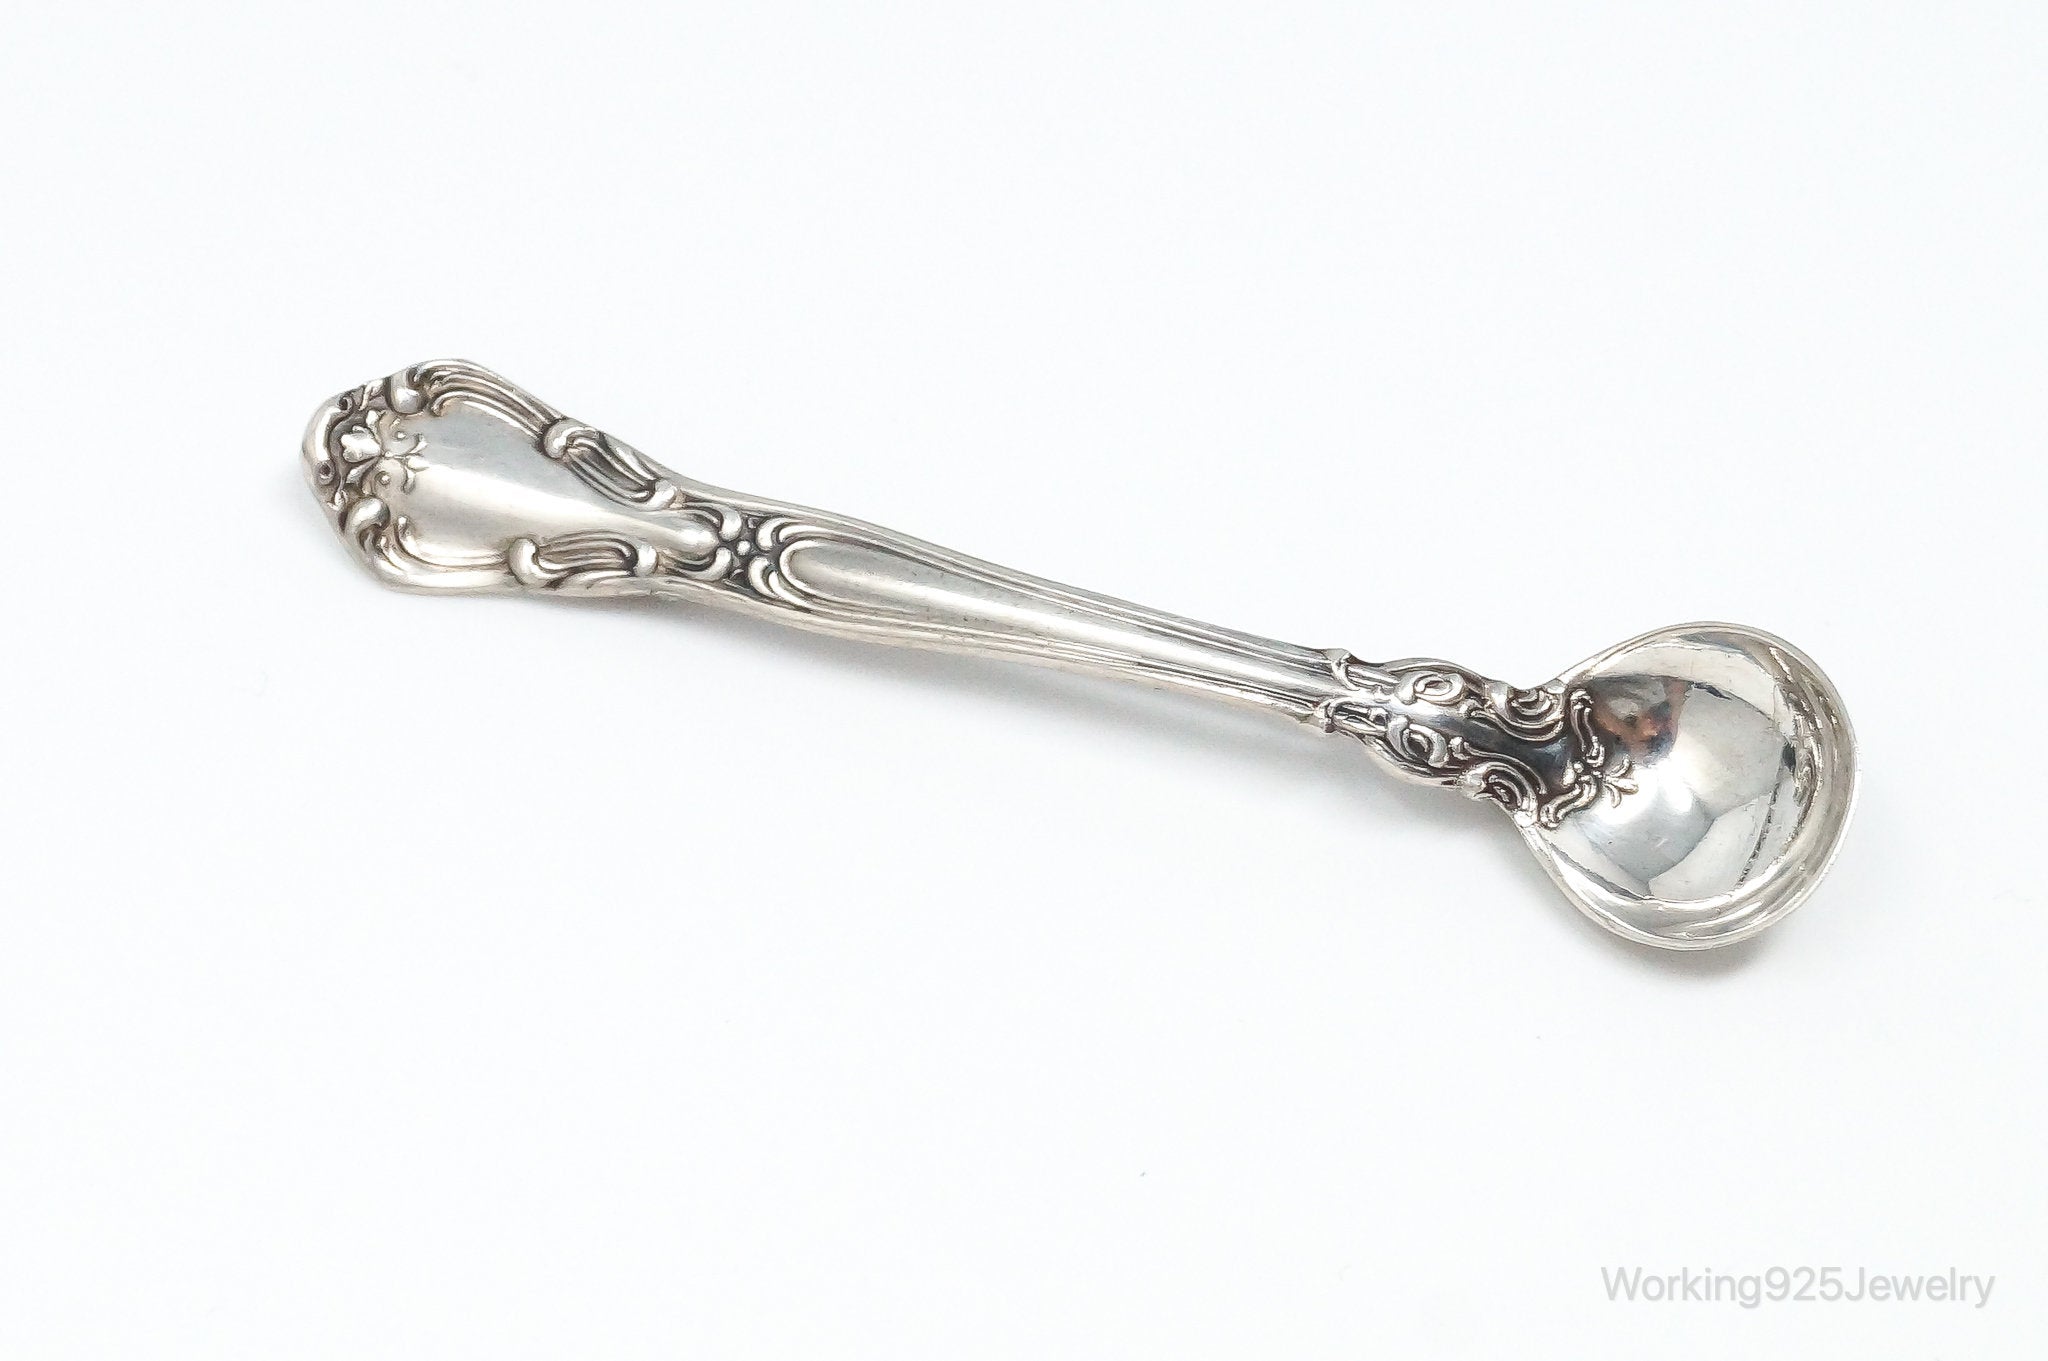 Antique GORHAM Spoon Sterling Silver Brooch Pin